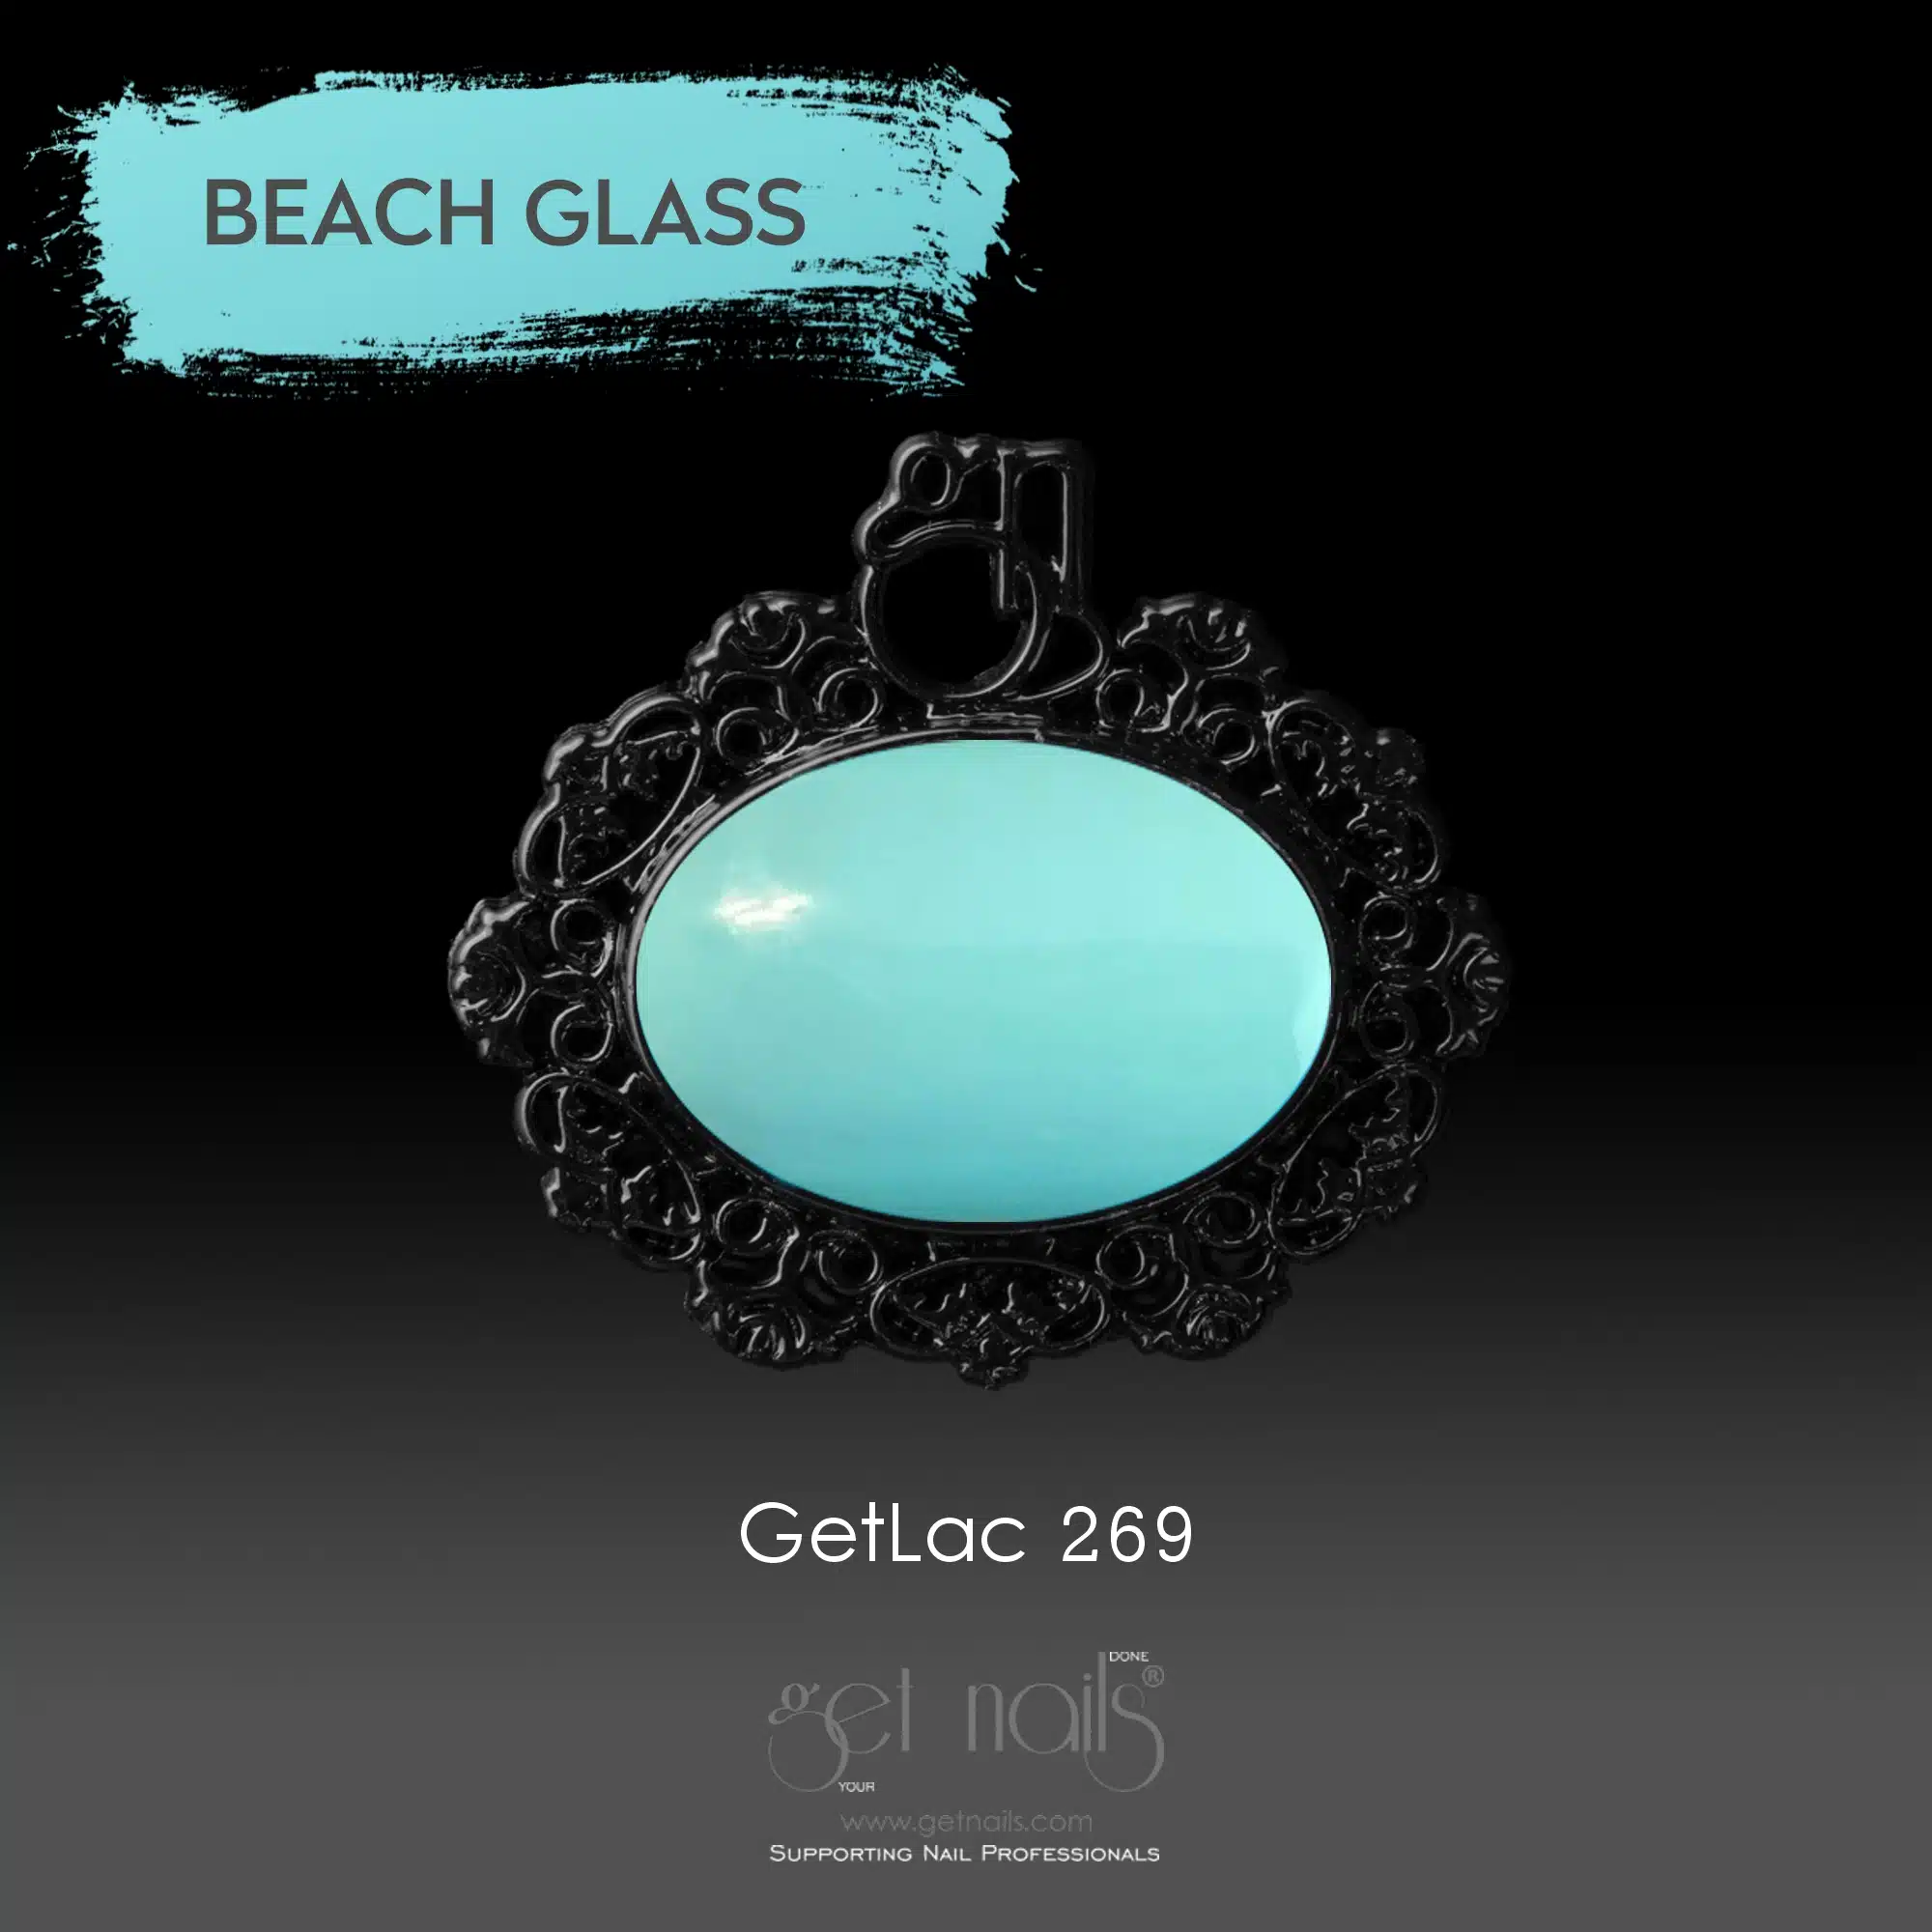 Get Nails Austria - GetLac 269 15g Beach Glass